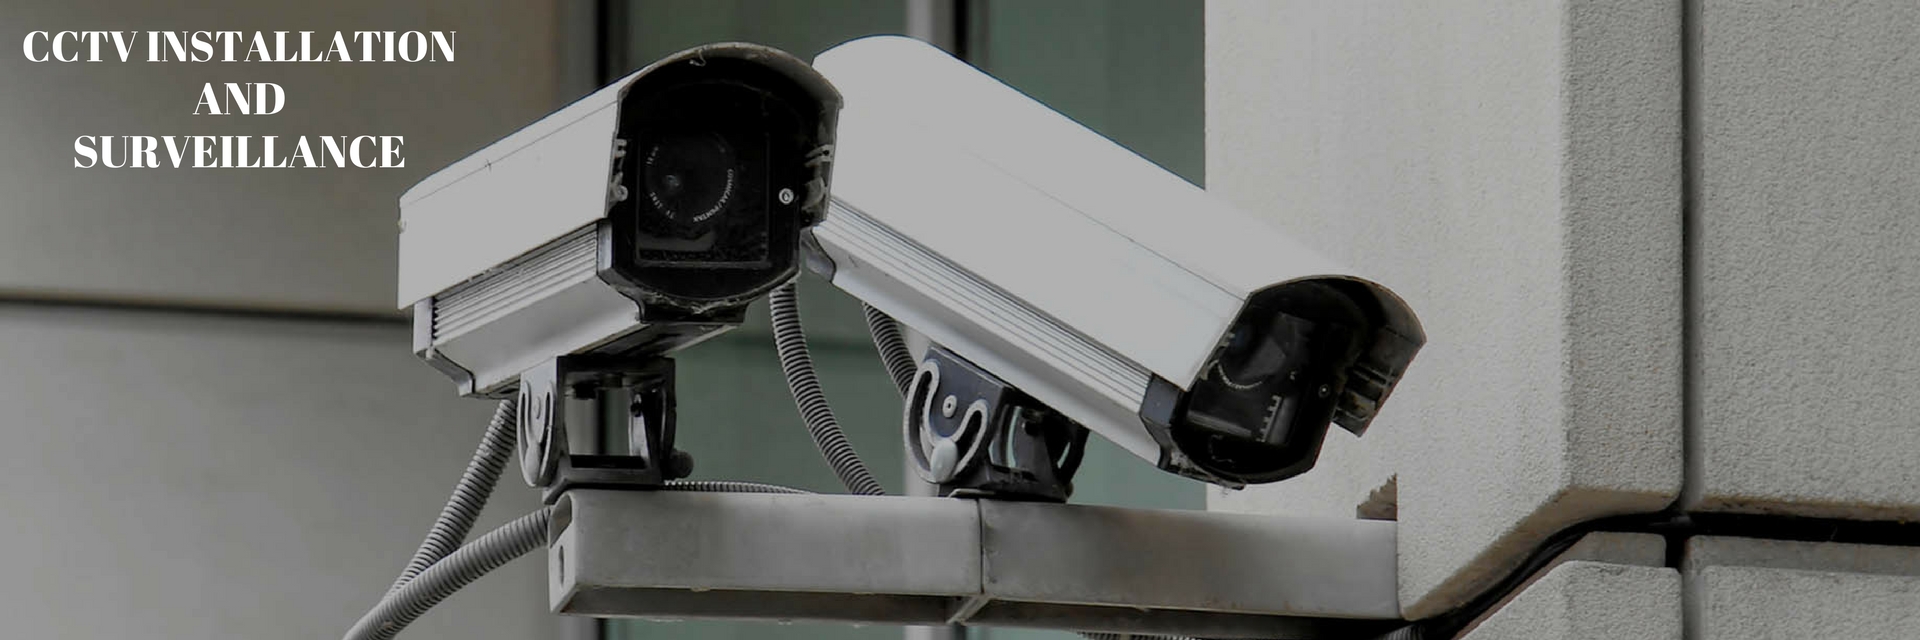 CCTV REMOTE MONITORING